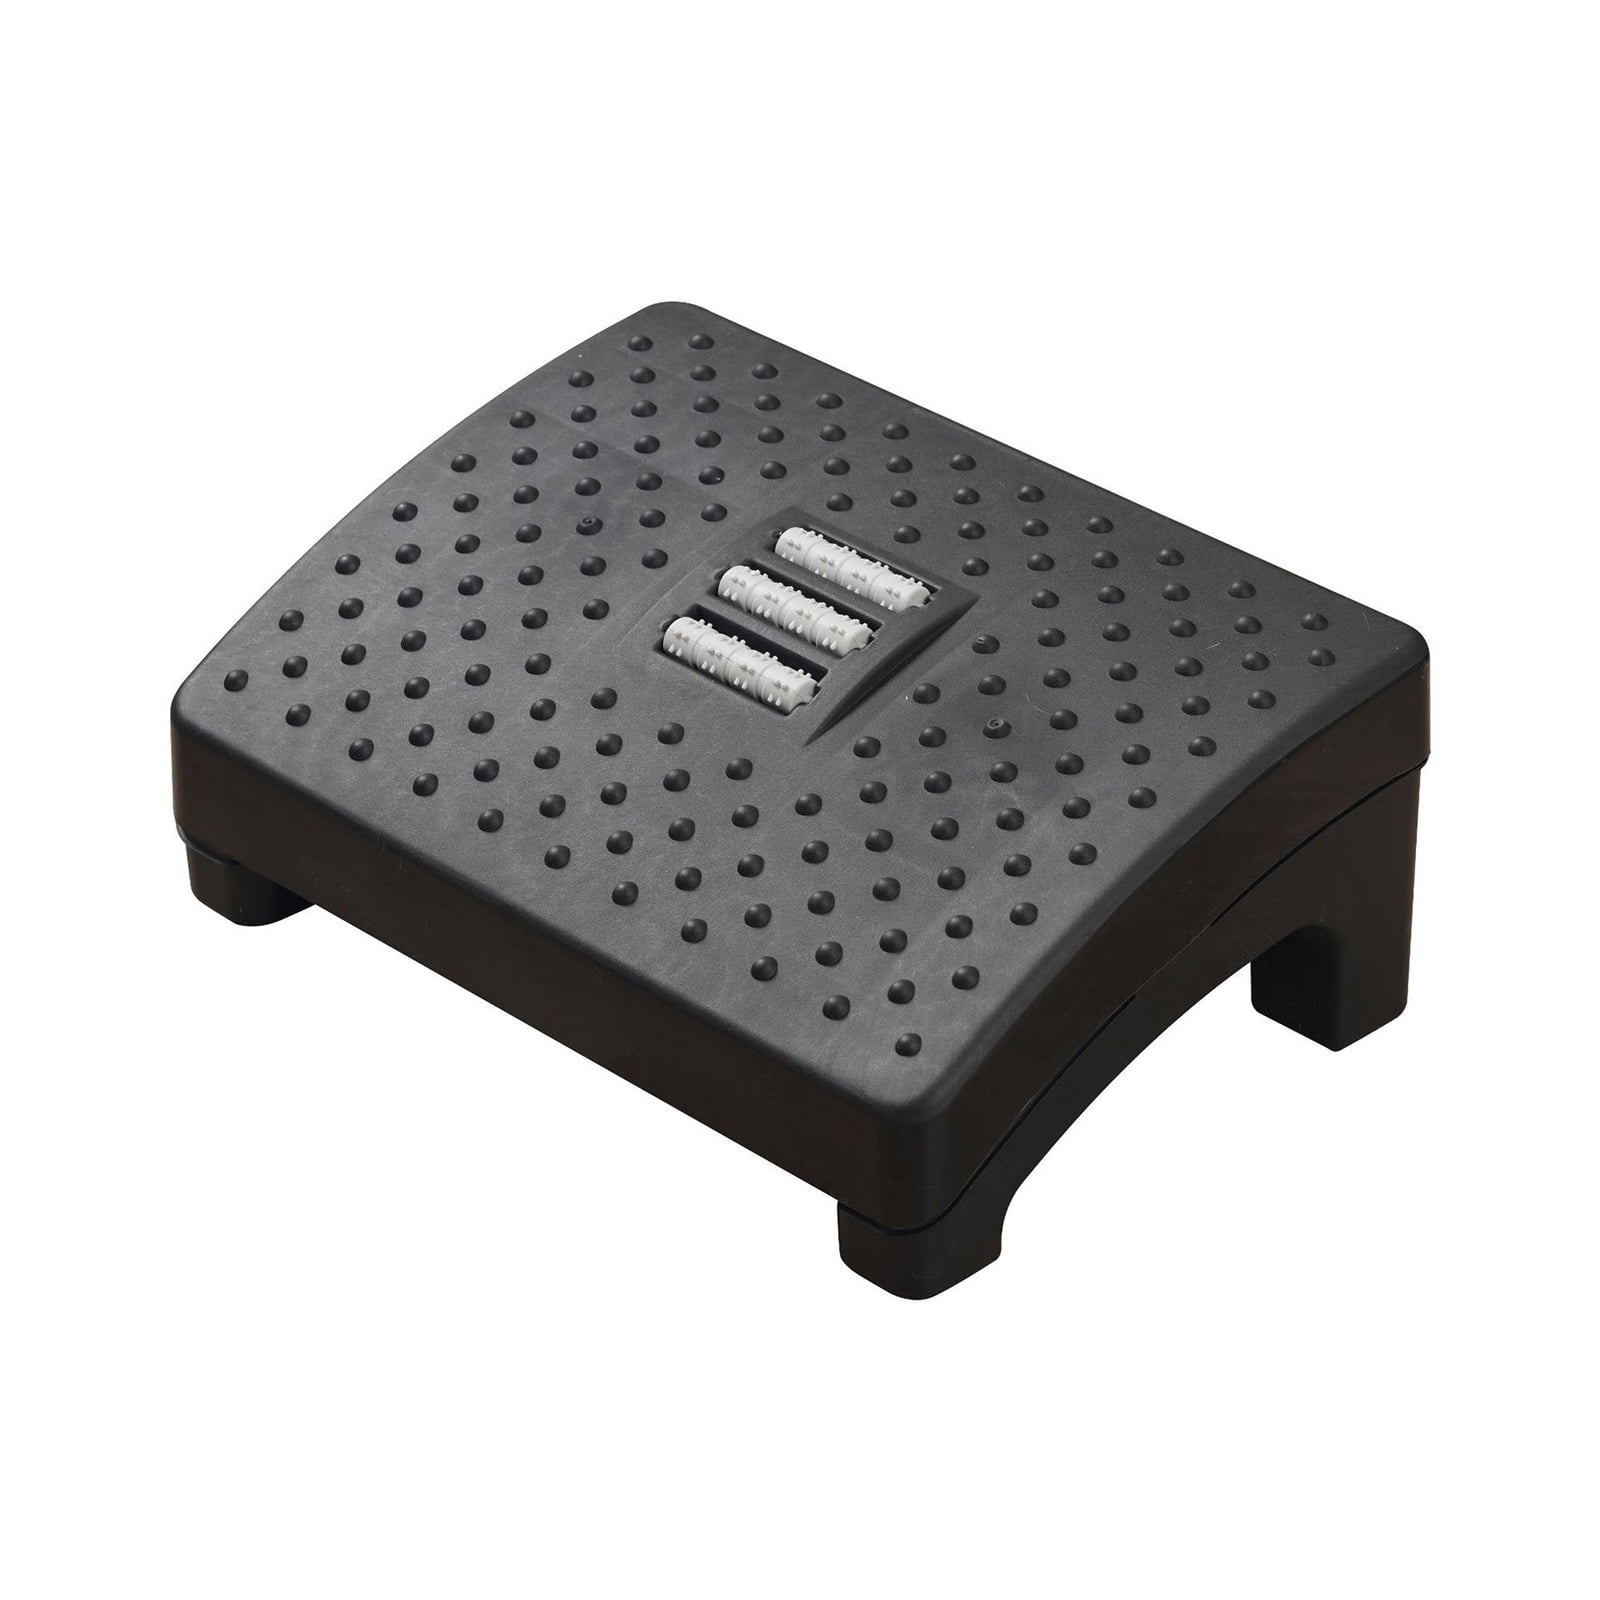  HUANUO Adjustable Under Desk Footrest, Ergonomic Keyboard Tray  Under Desk : Office Products